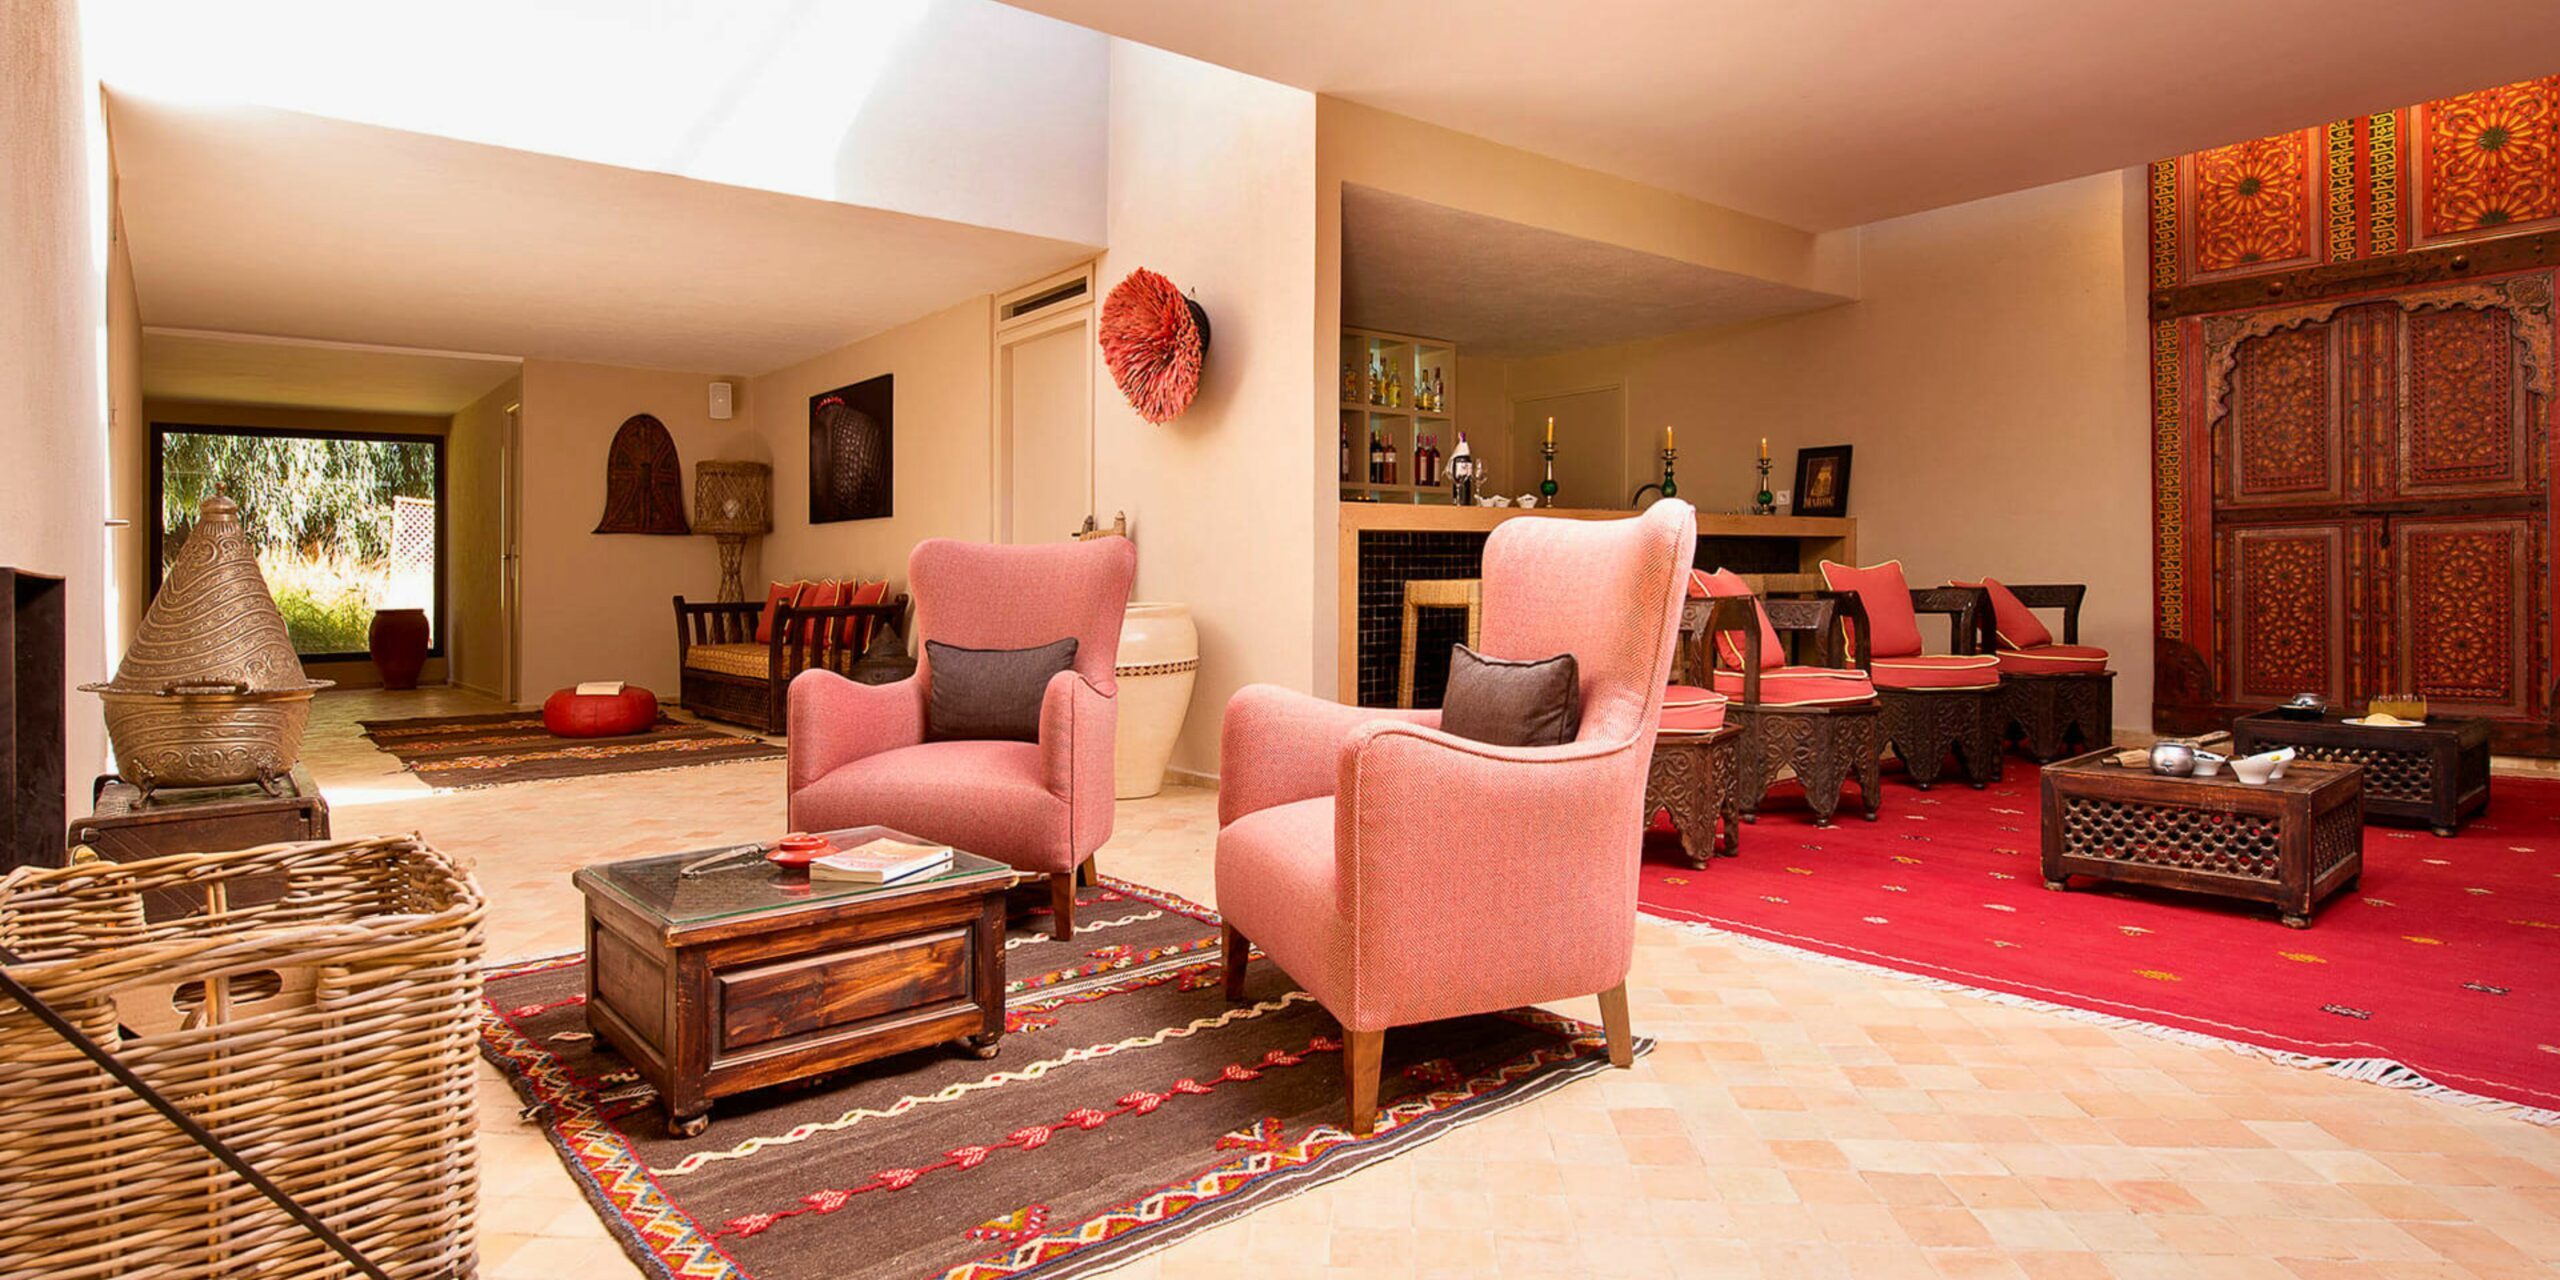 Le salon de la villa en location à Agadir